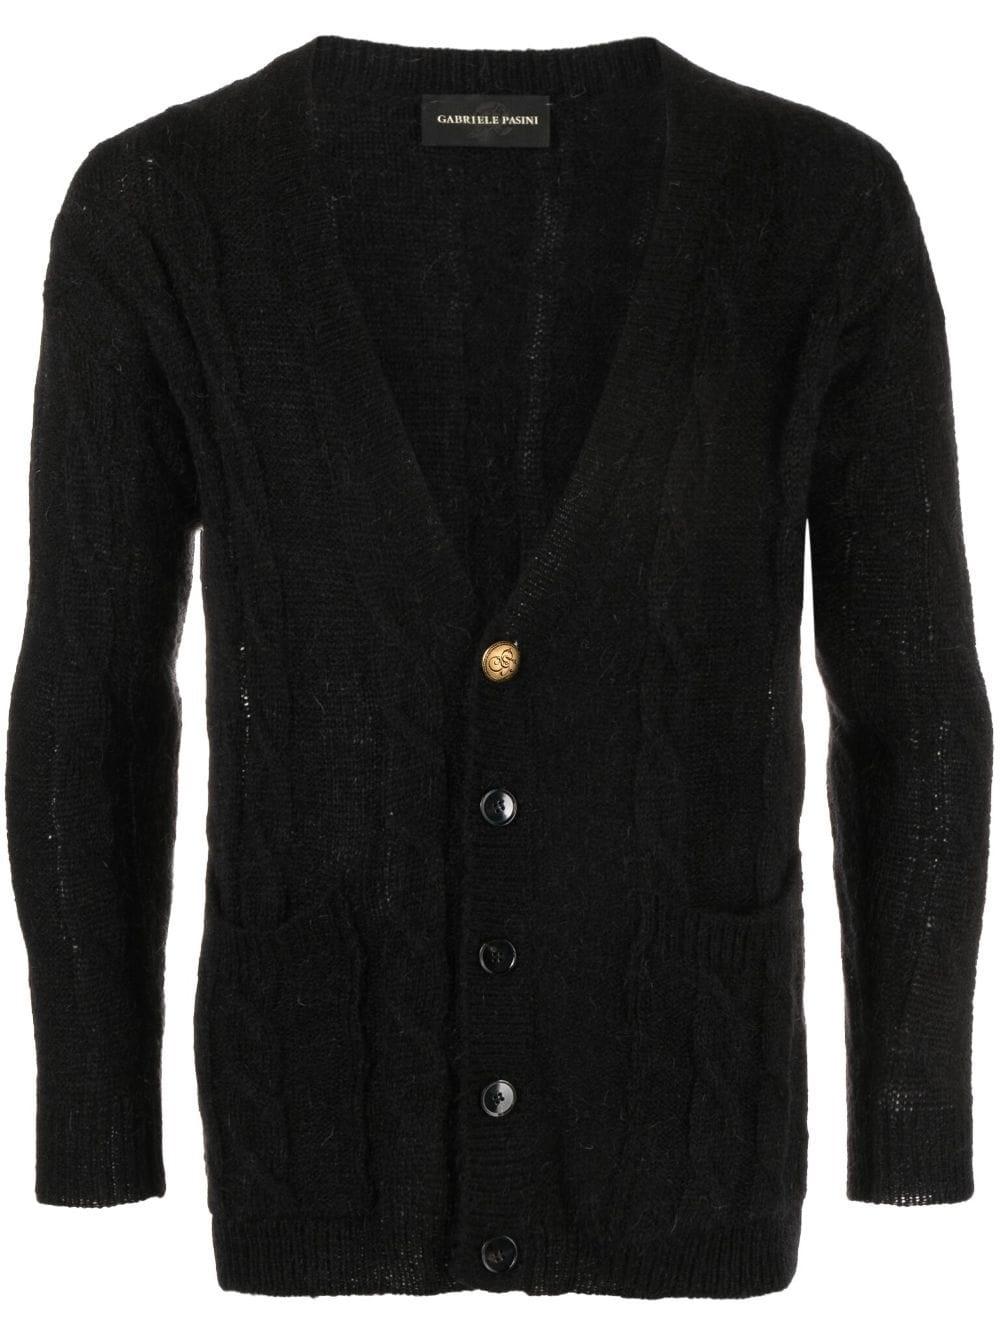 Gabriele Pasini Cable knit V neck Cardigan in Black for Men   Lyst